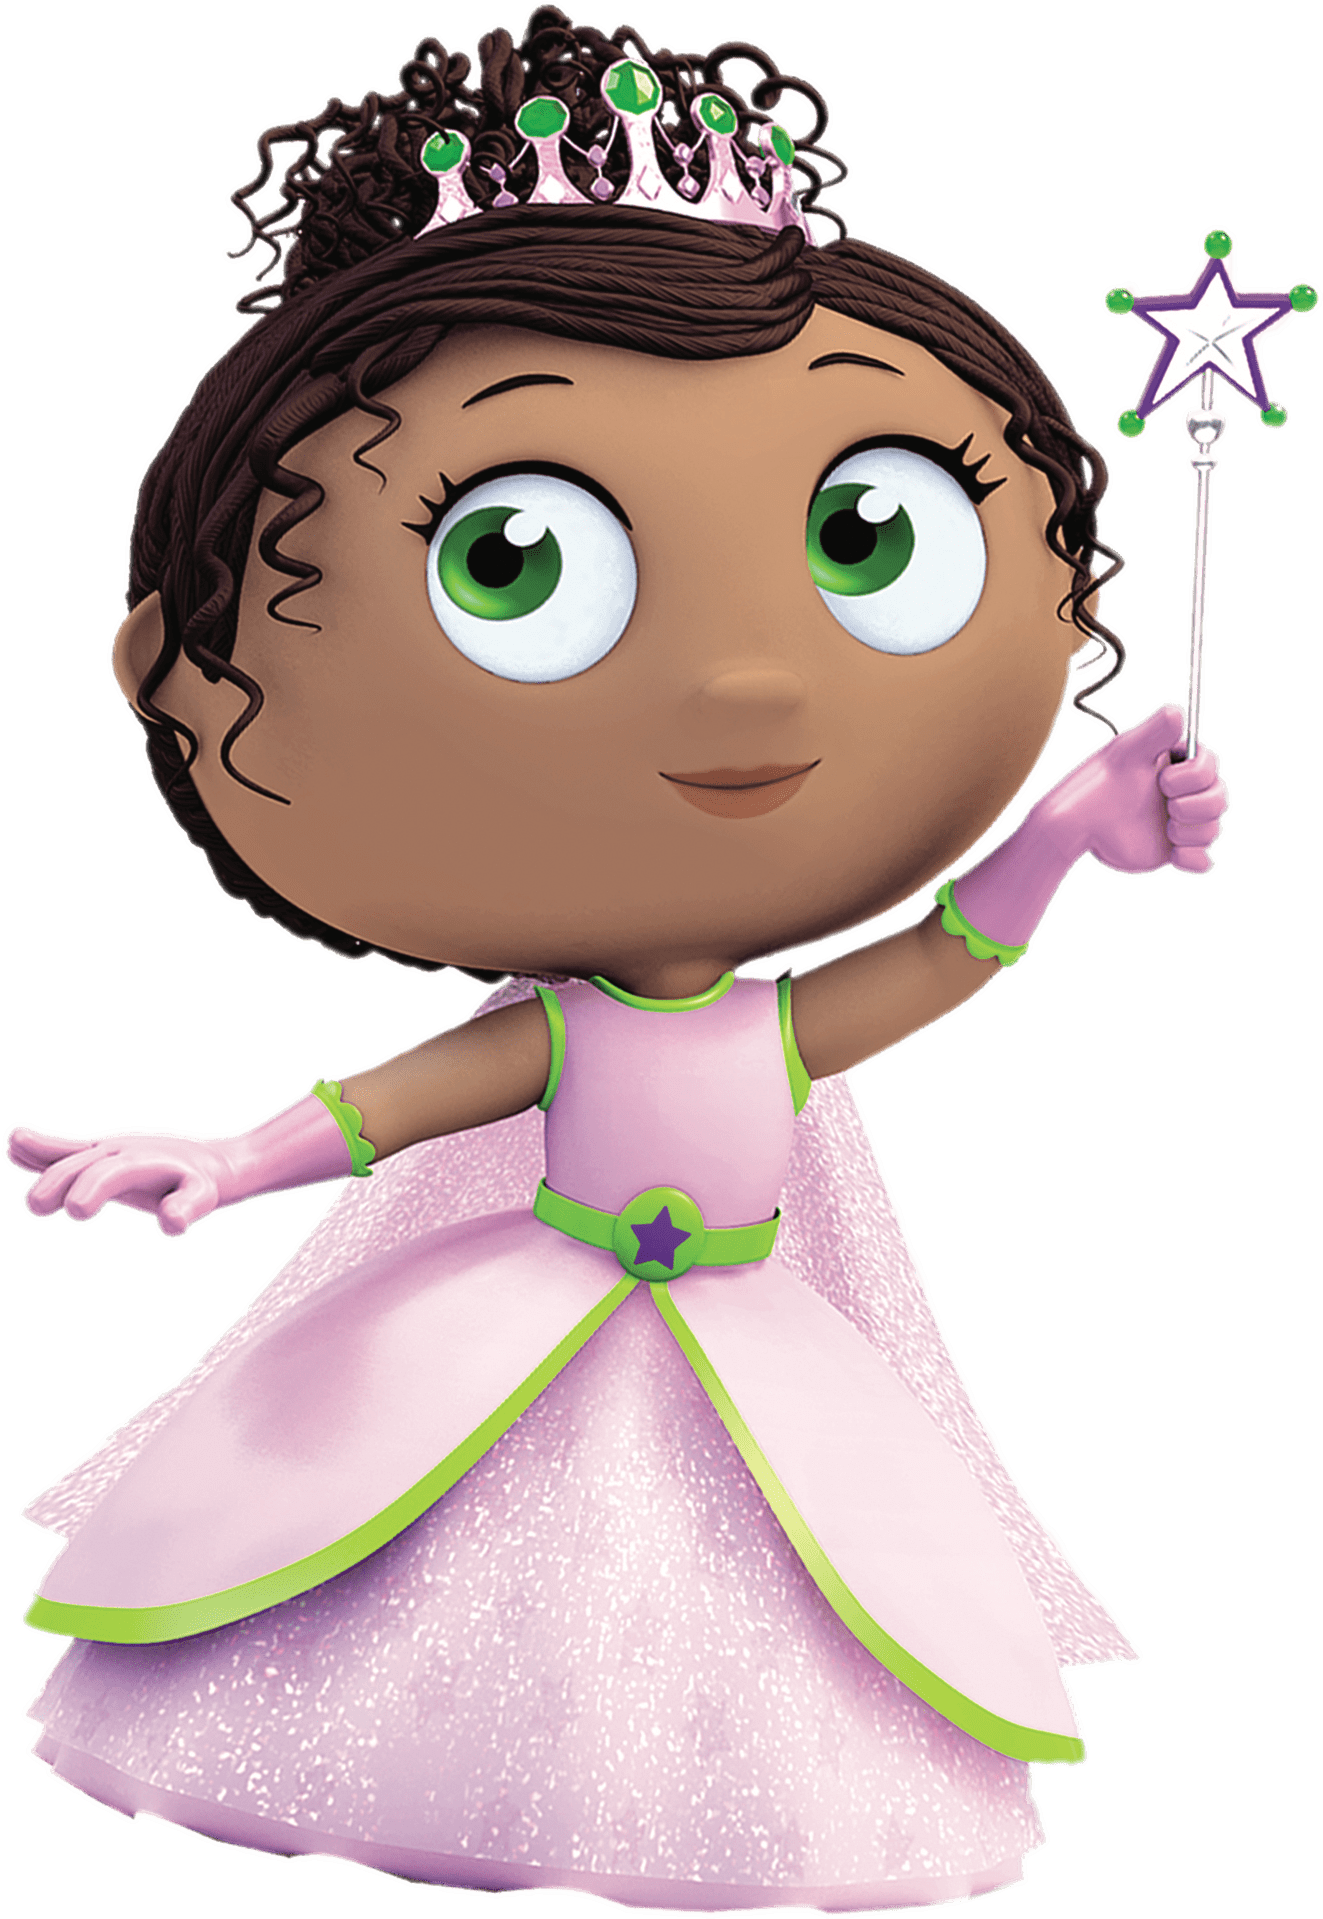 Animated Princess With Wand PNG image